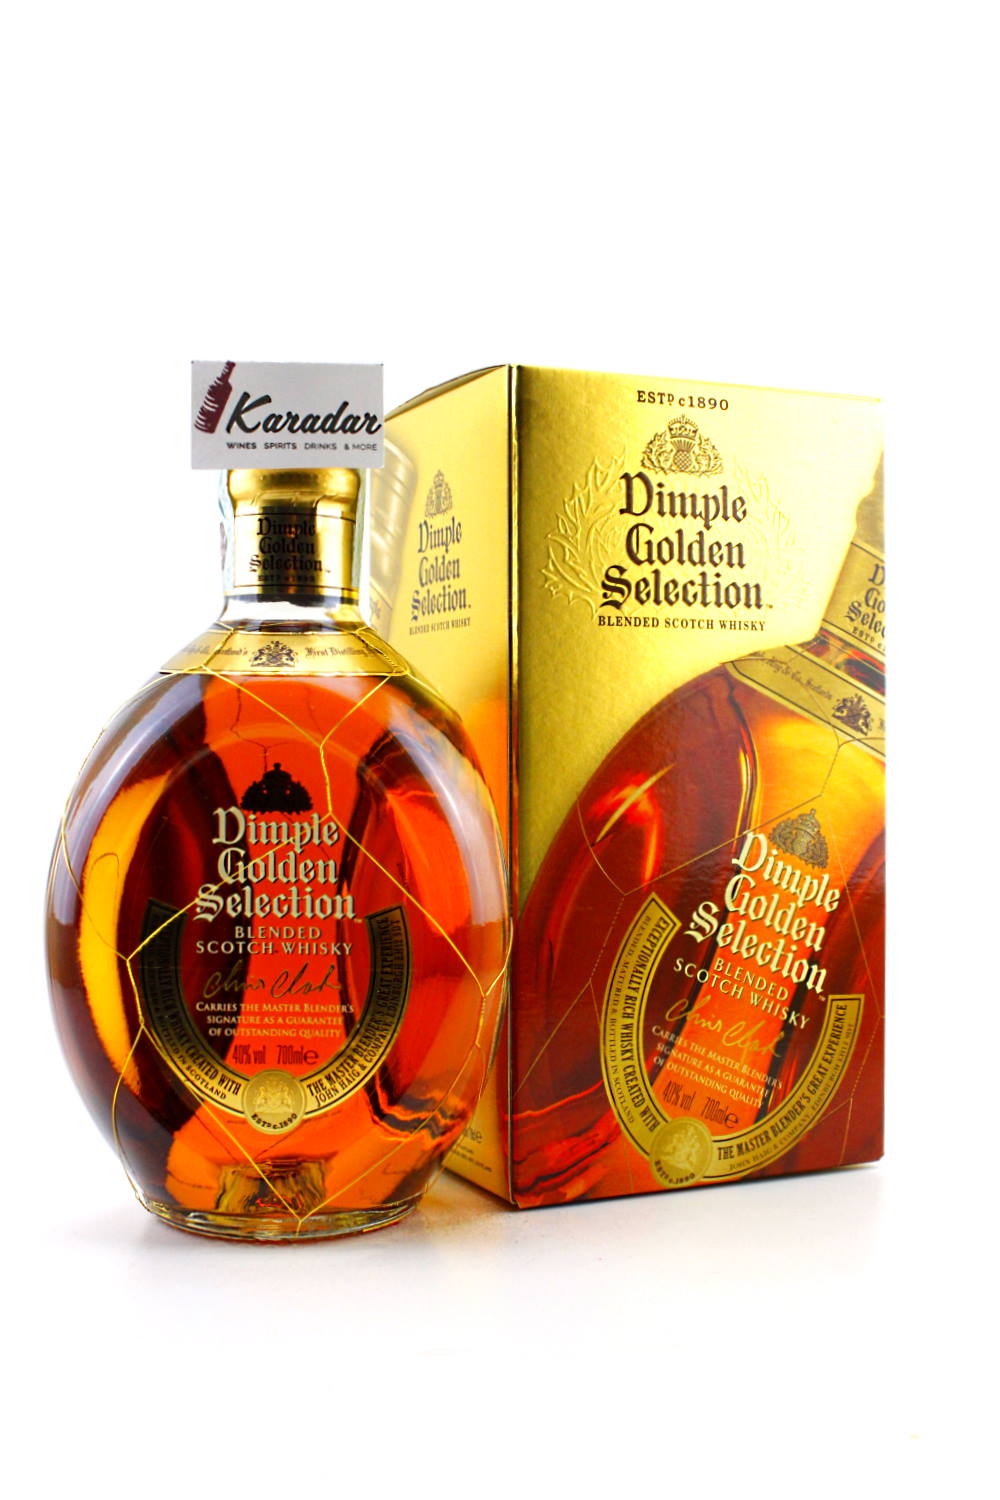 Dimple Golden Selection vol. Scotland Whisky 40